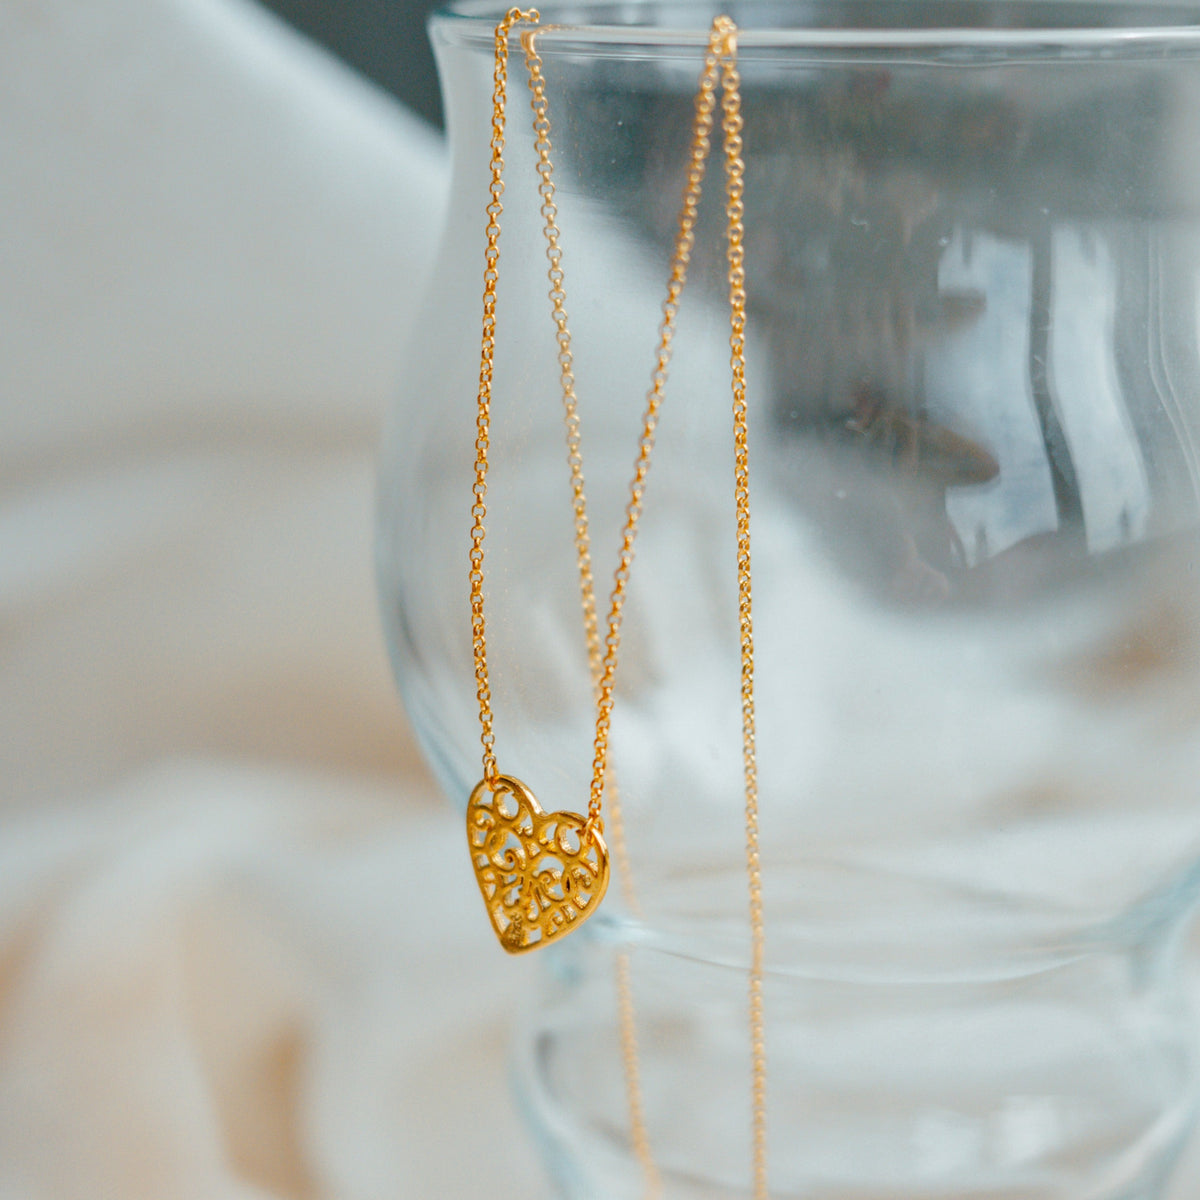 Arabesque Heart Necklace